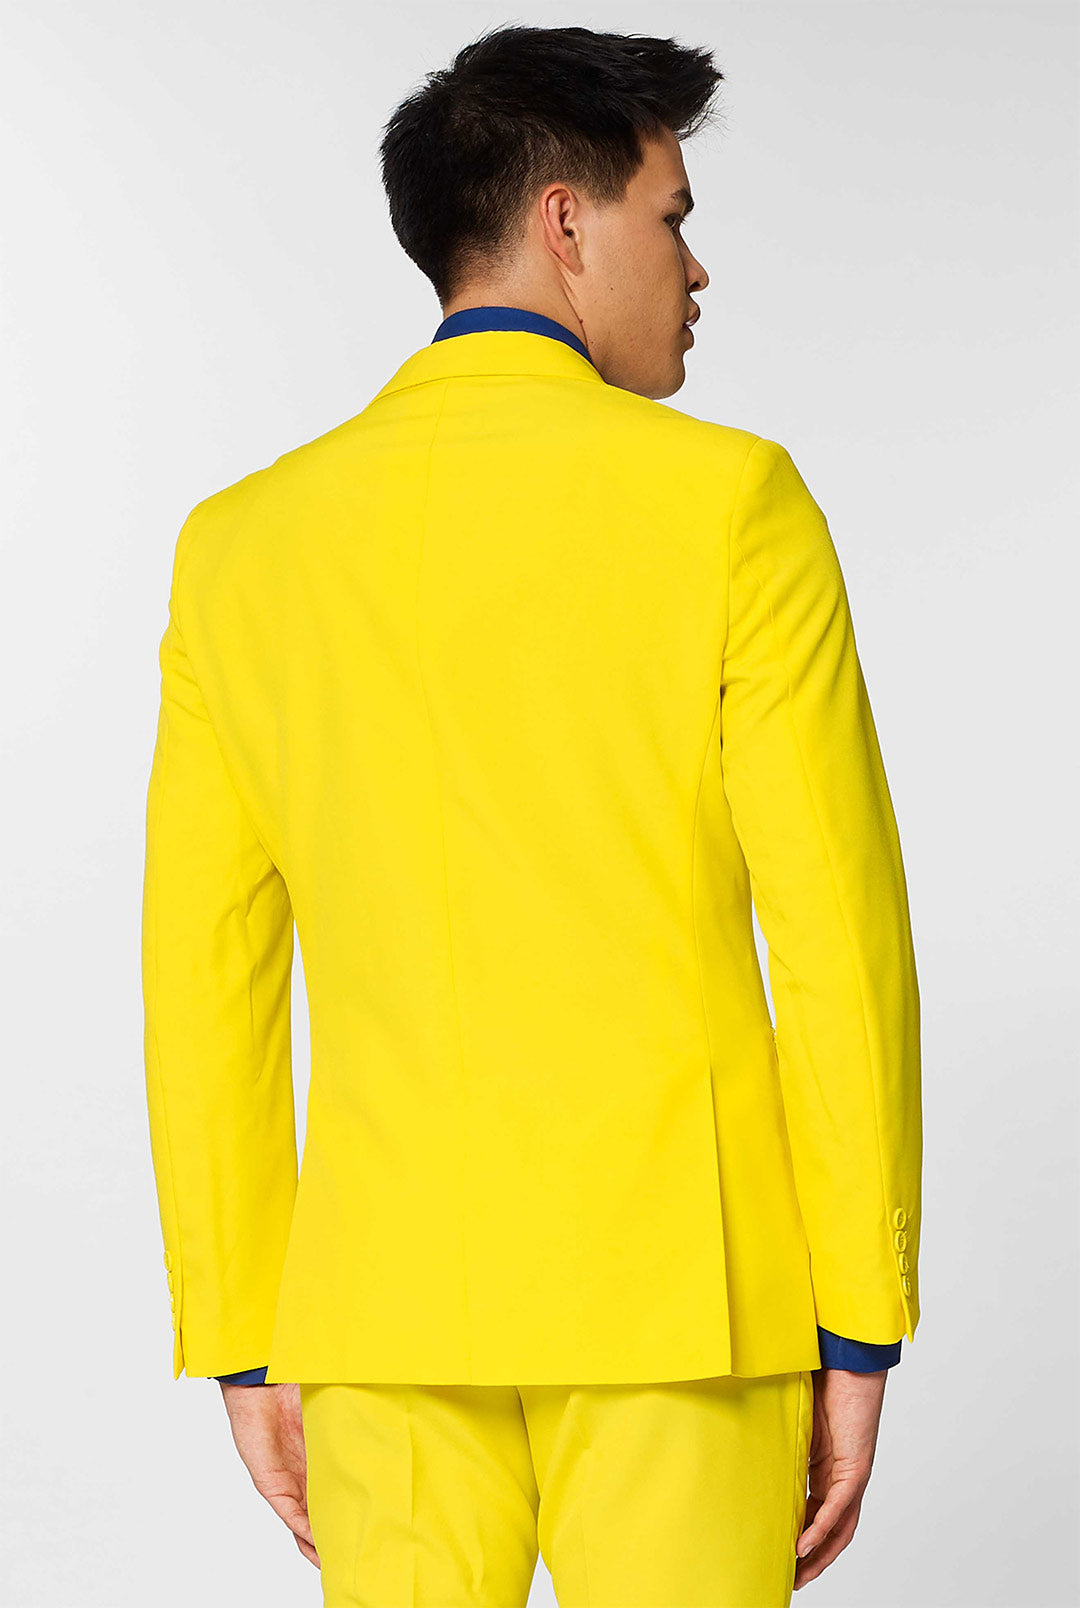 4 Button Suit Yellow - GQ Gentlemen's Quarters Fashion By GQ